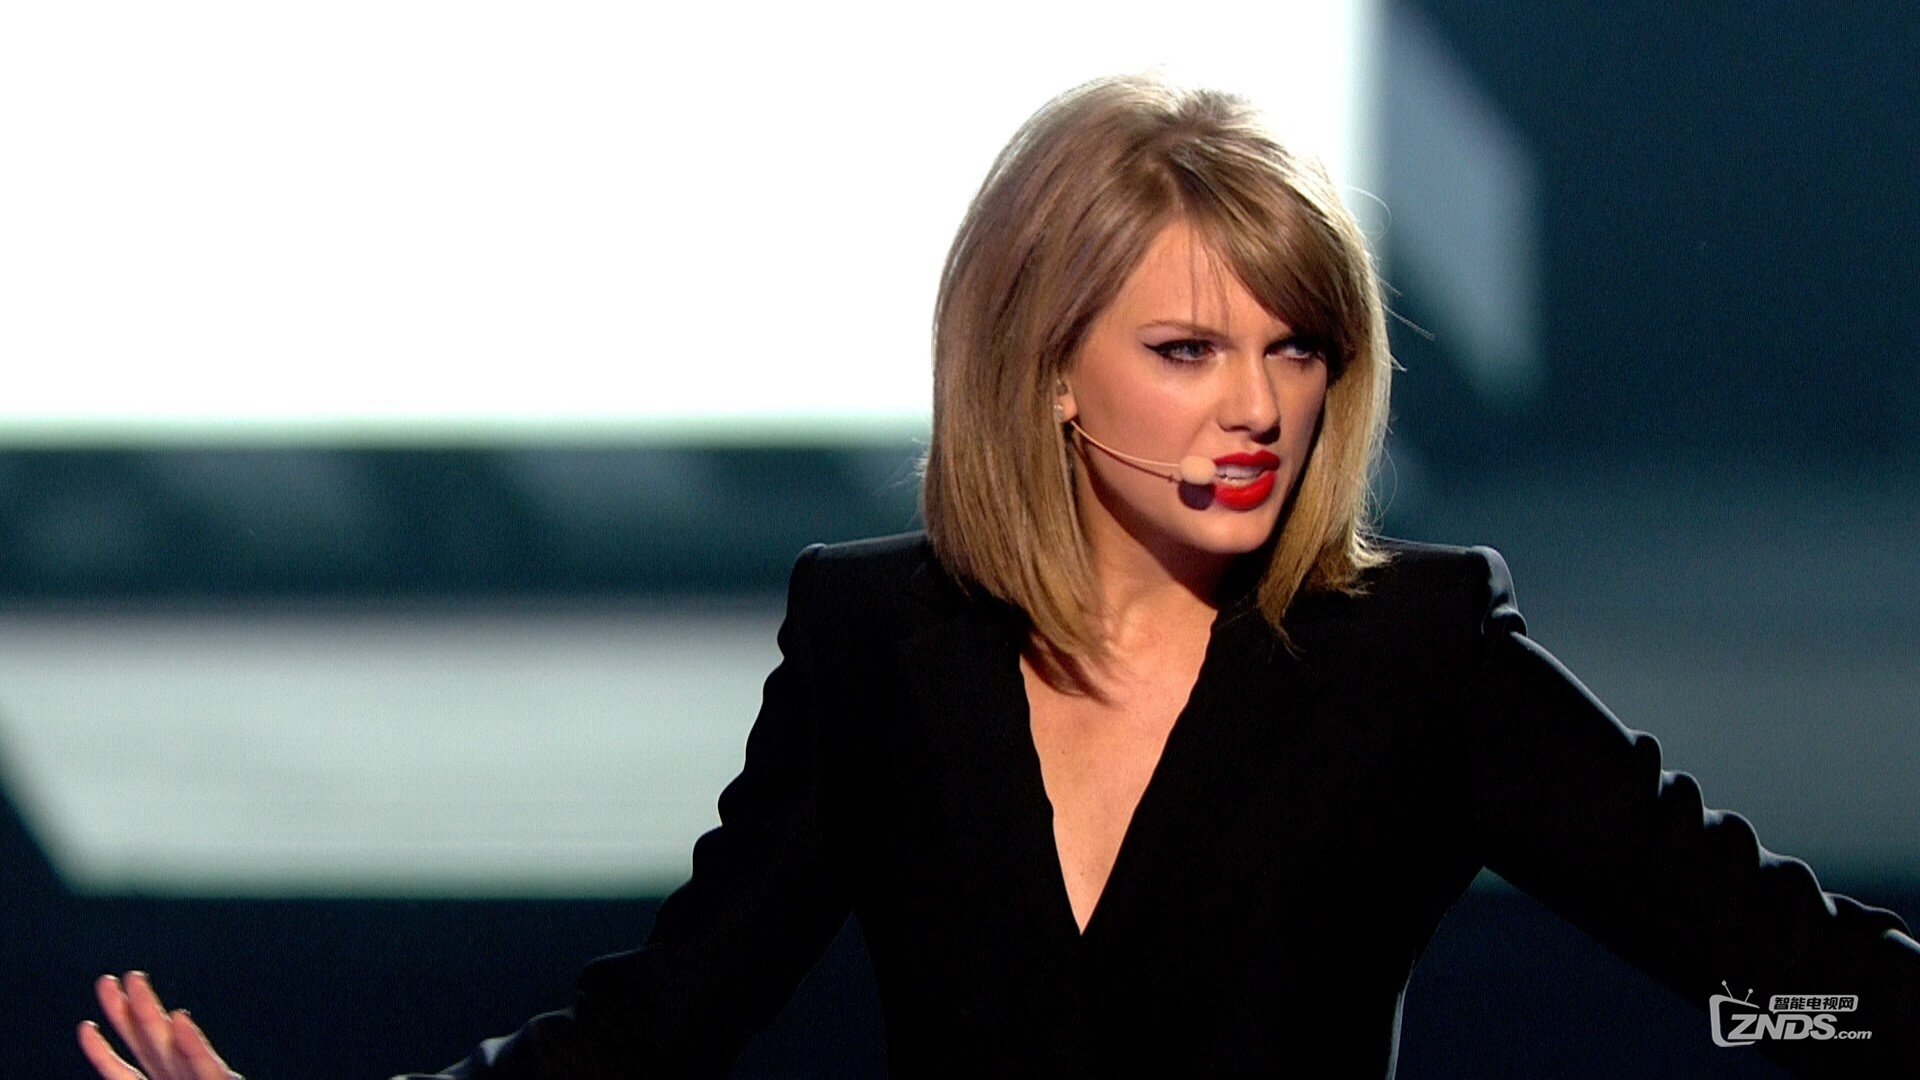 Taylor Swift - Blank Space - BRIT Awards 2015 1080i HDTV 45 Mbps MPA2.0 4-2-2 H..jpg